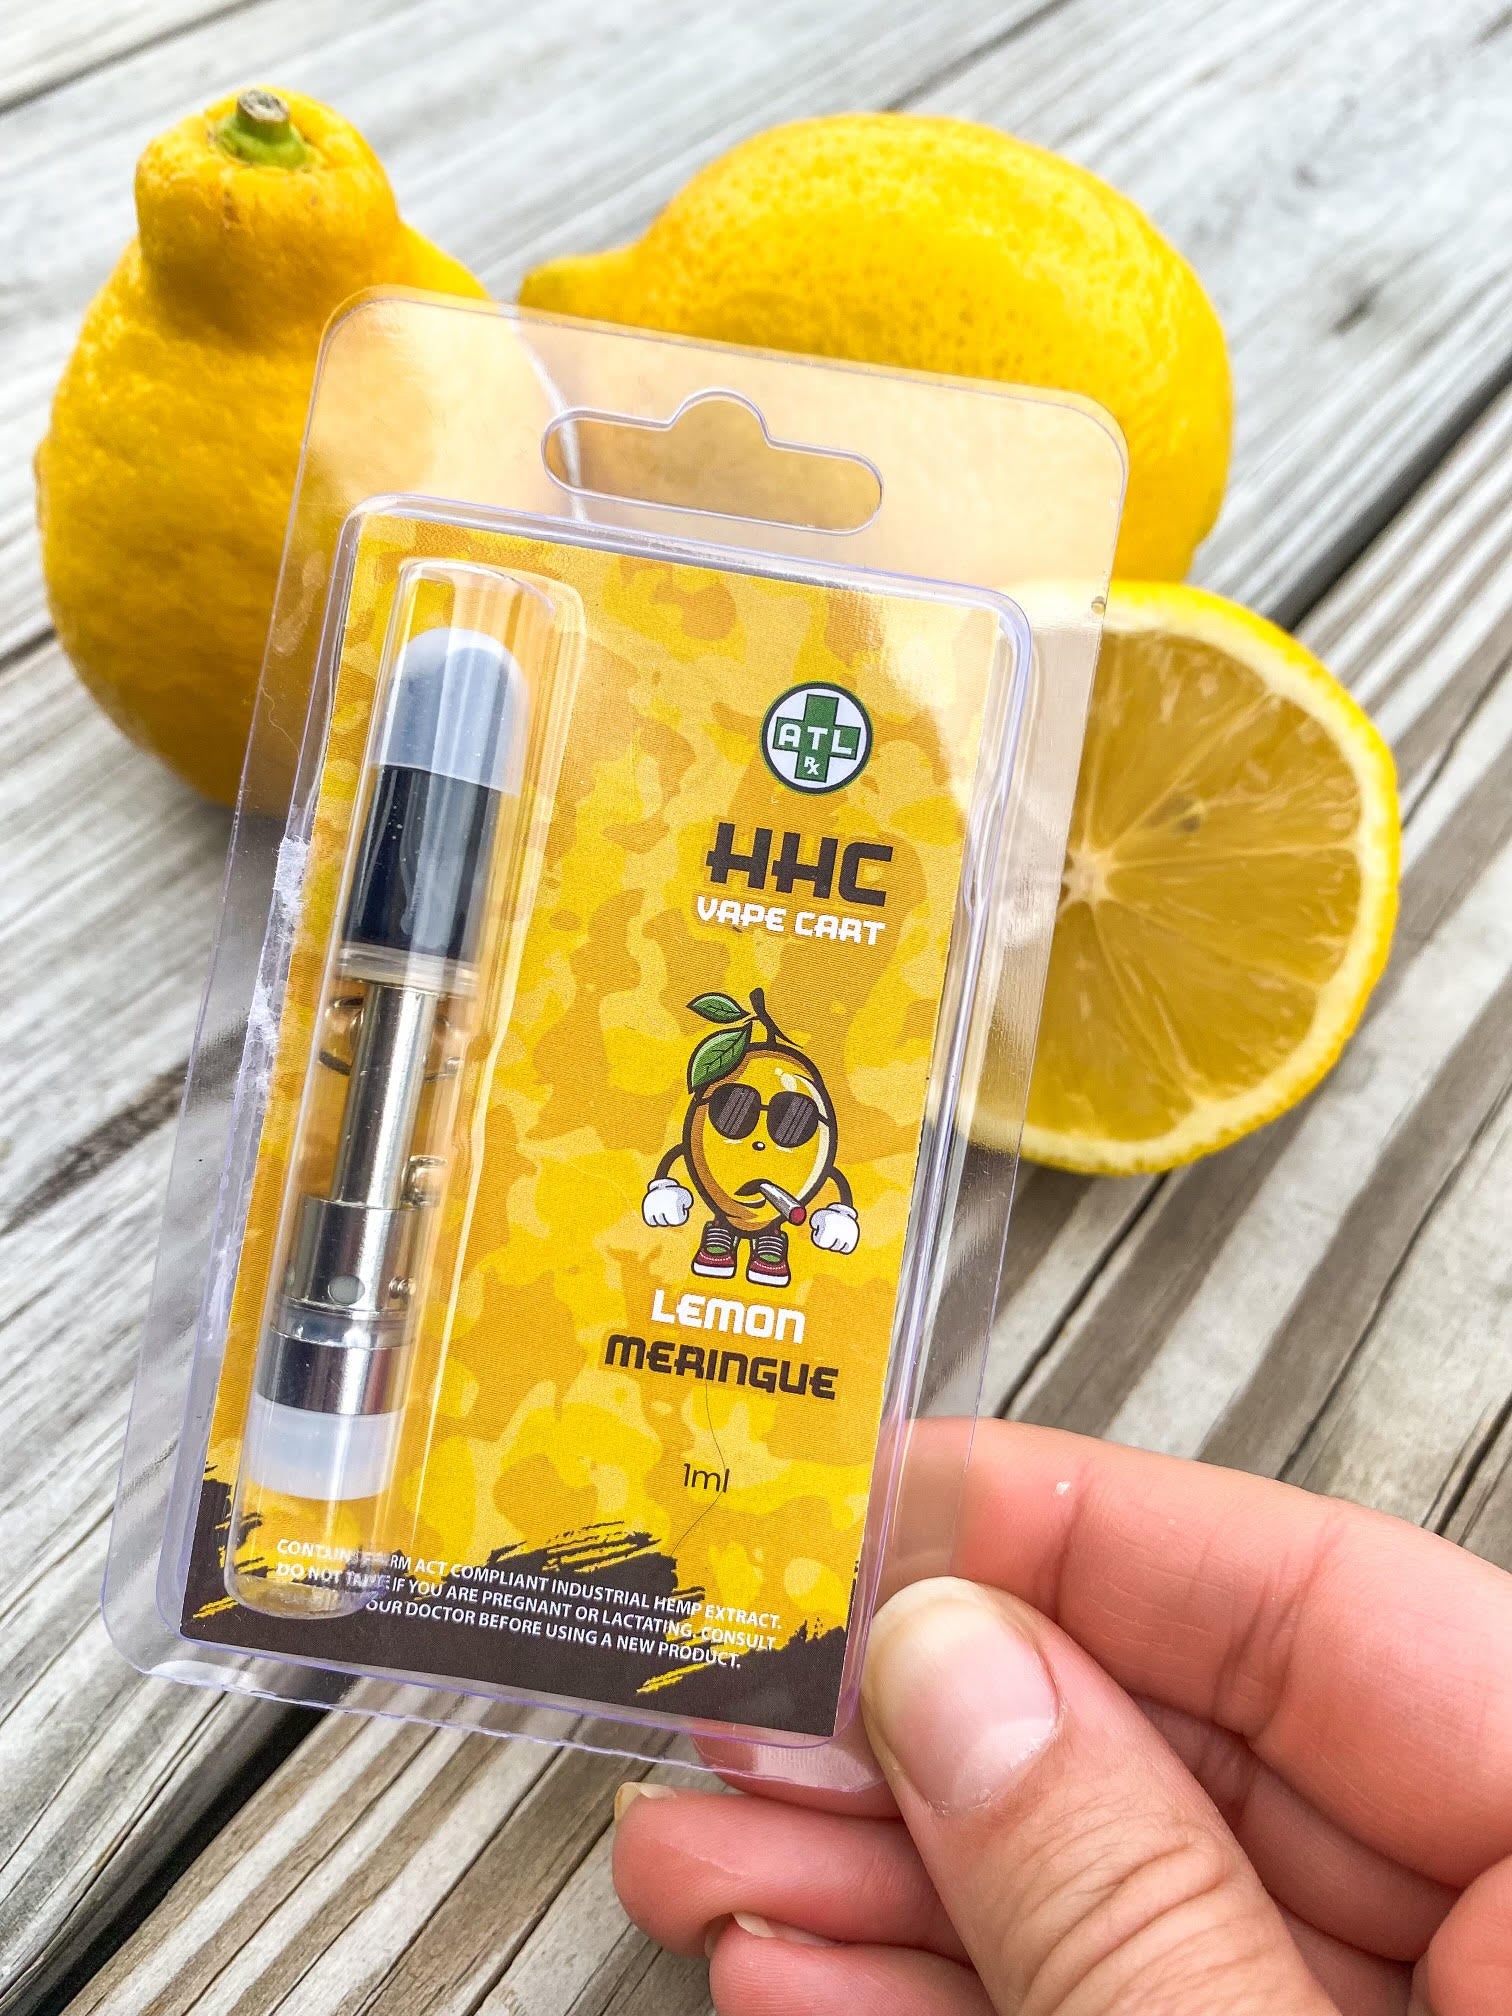 ATLRx’s HHC: Lemon Meringue, the Sativa of Life